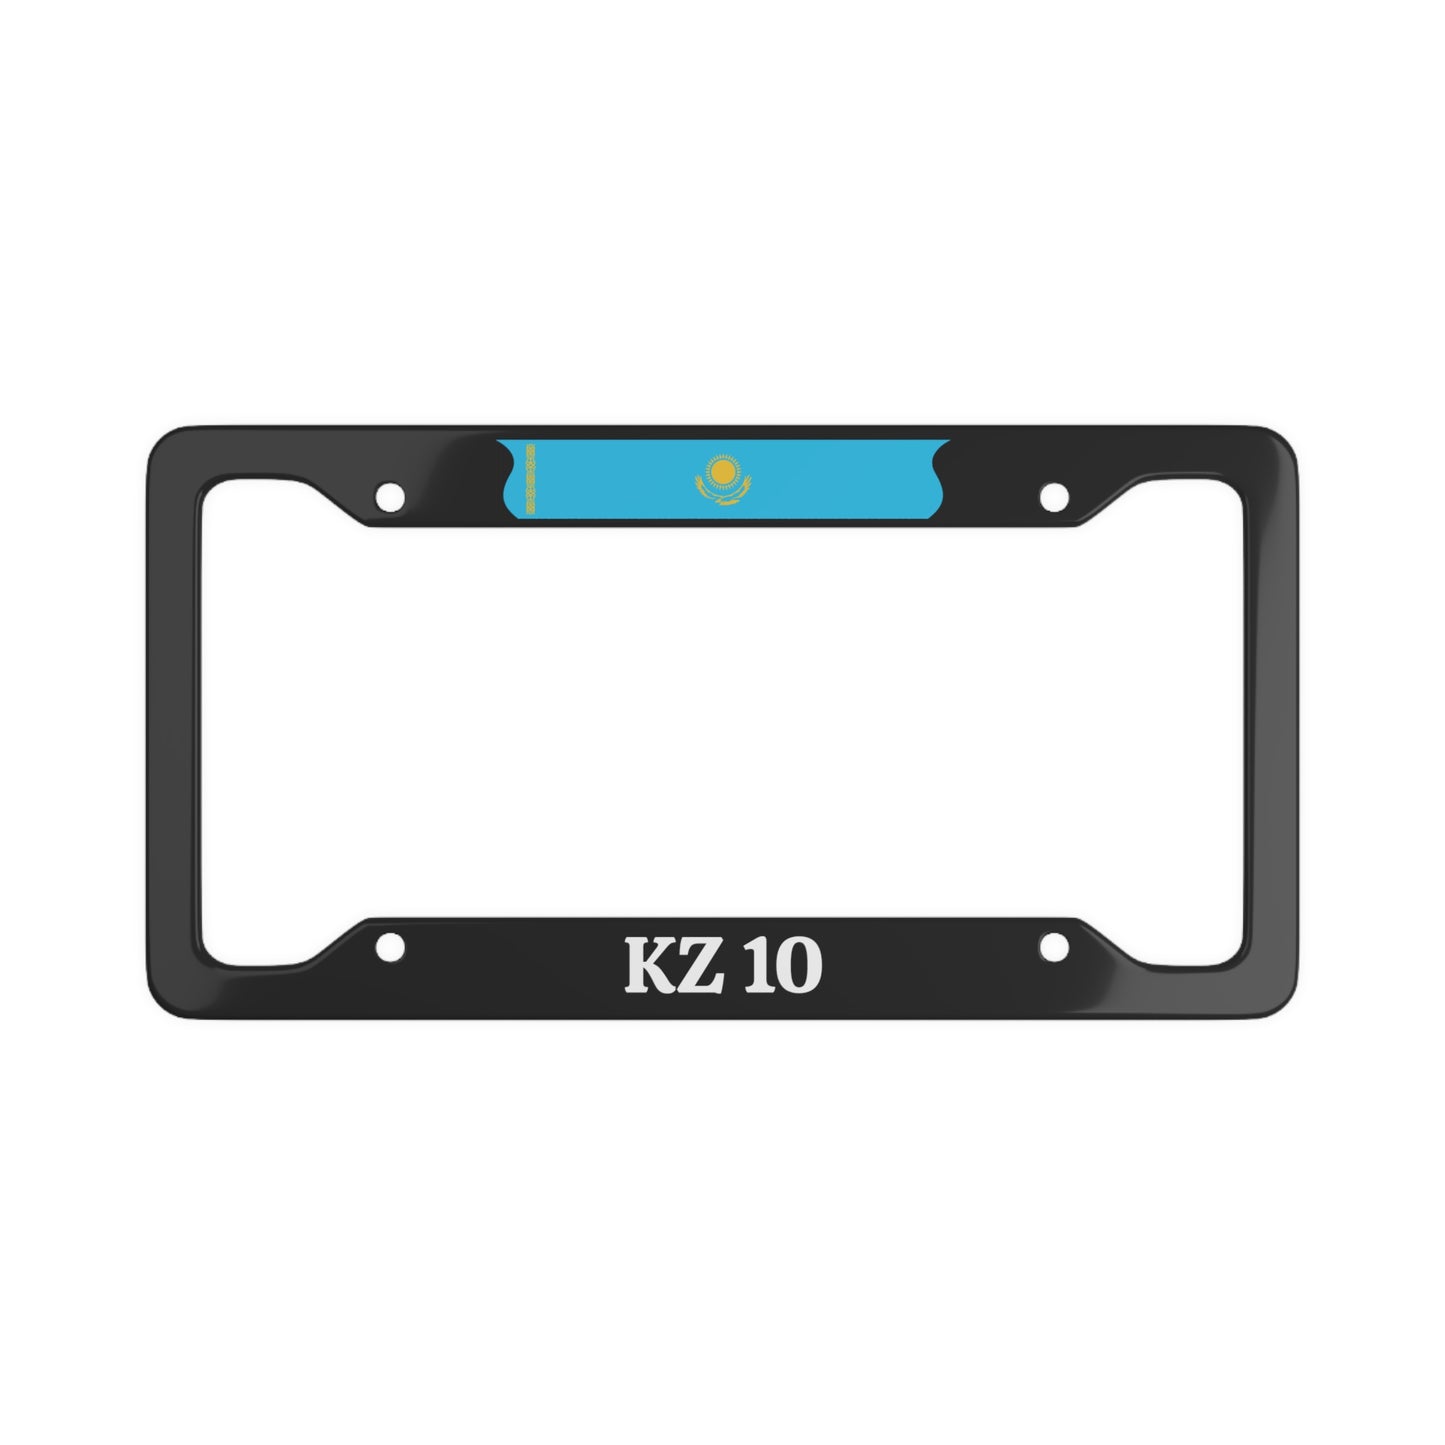 KZ 10 License Plate Frame